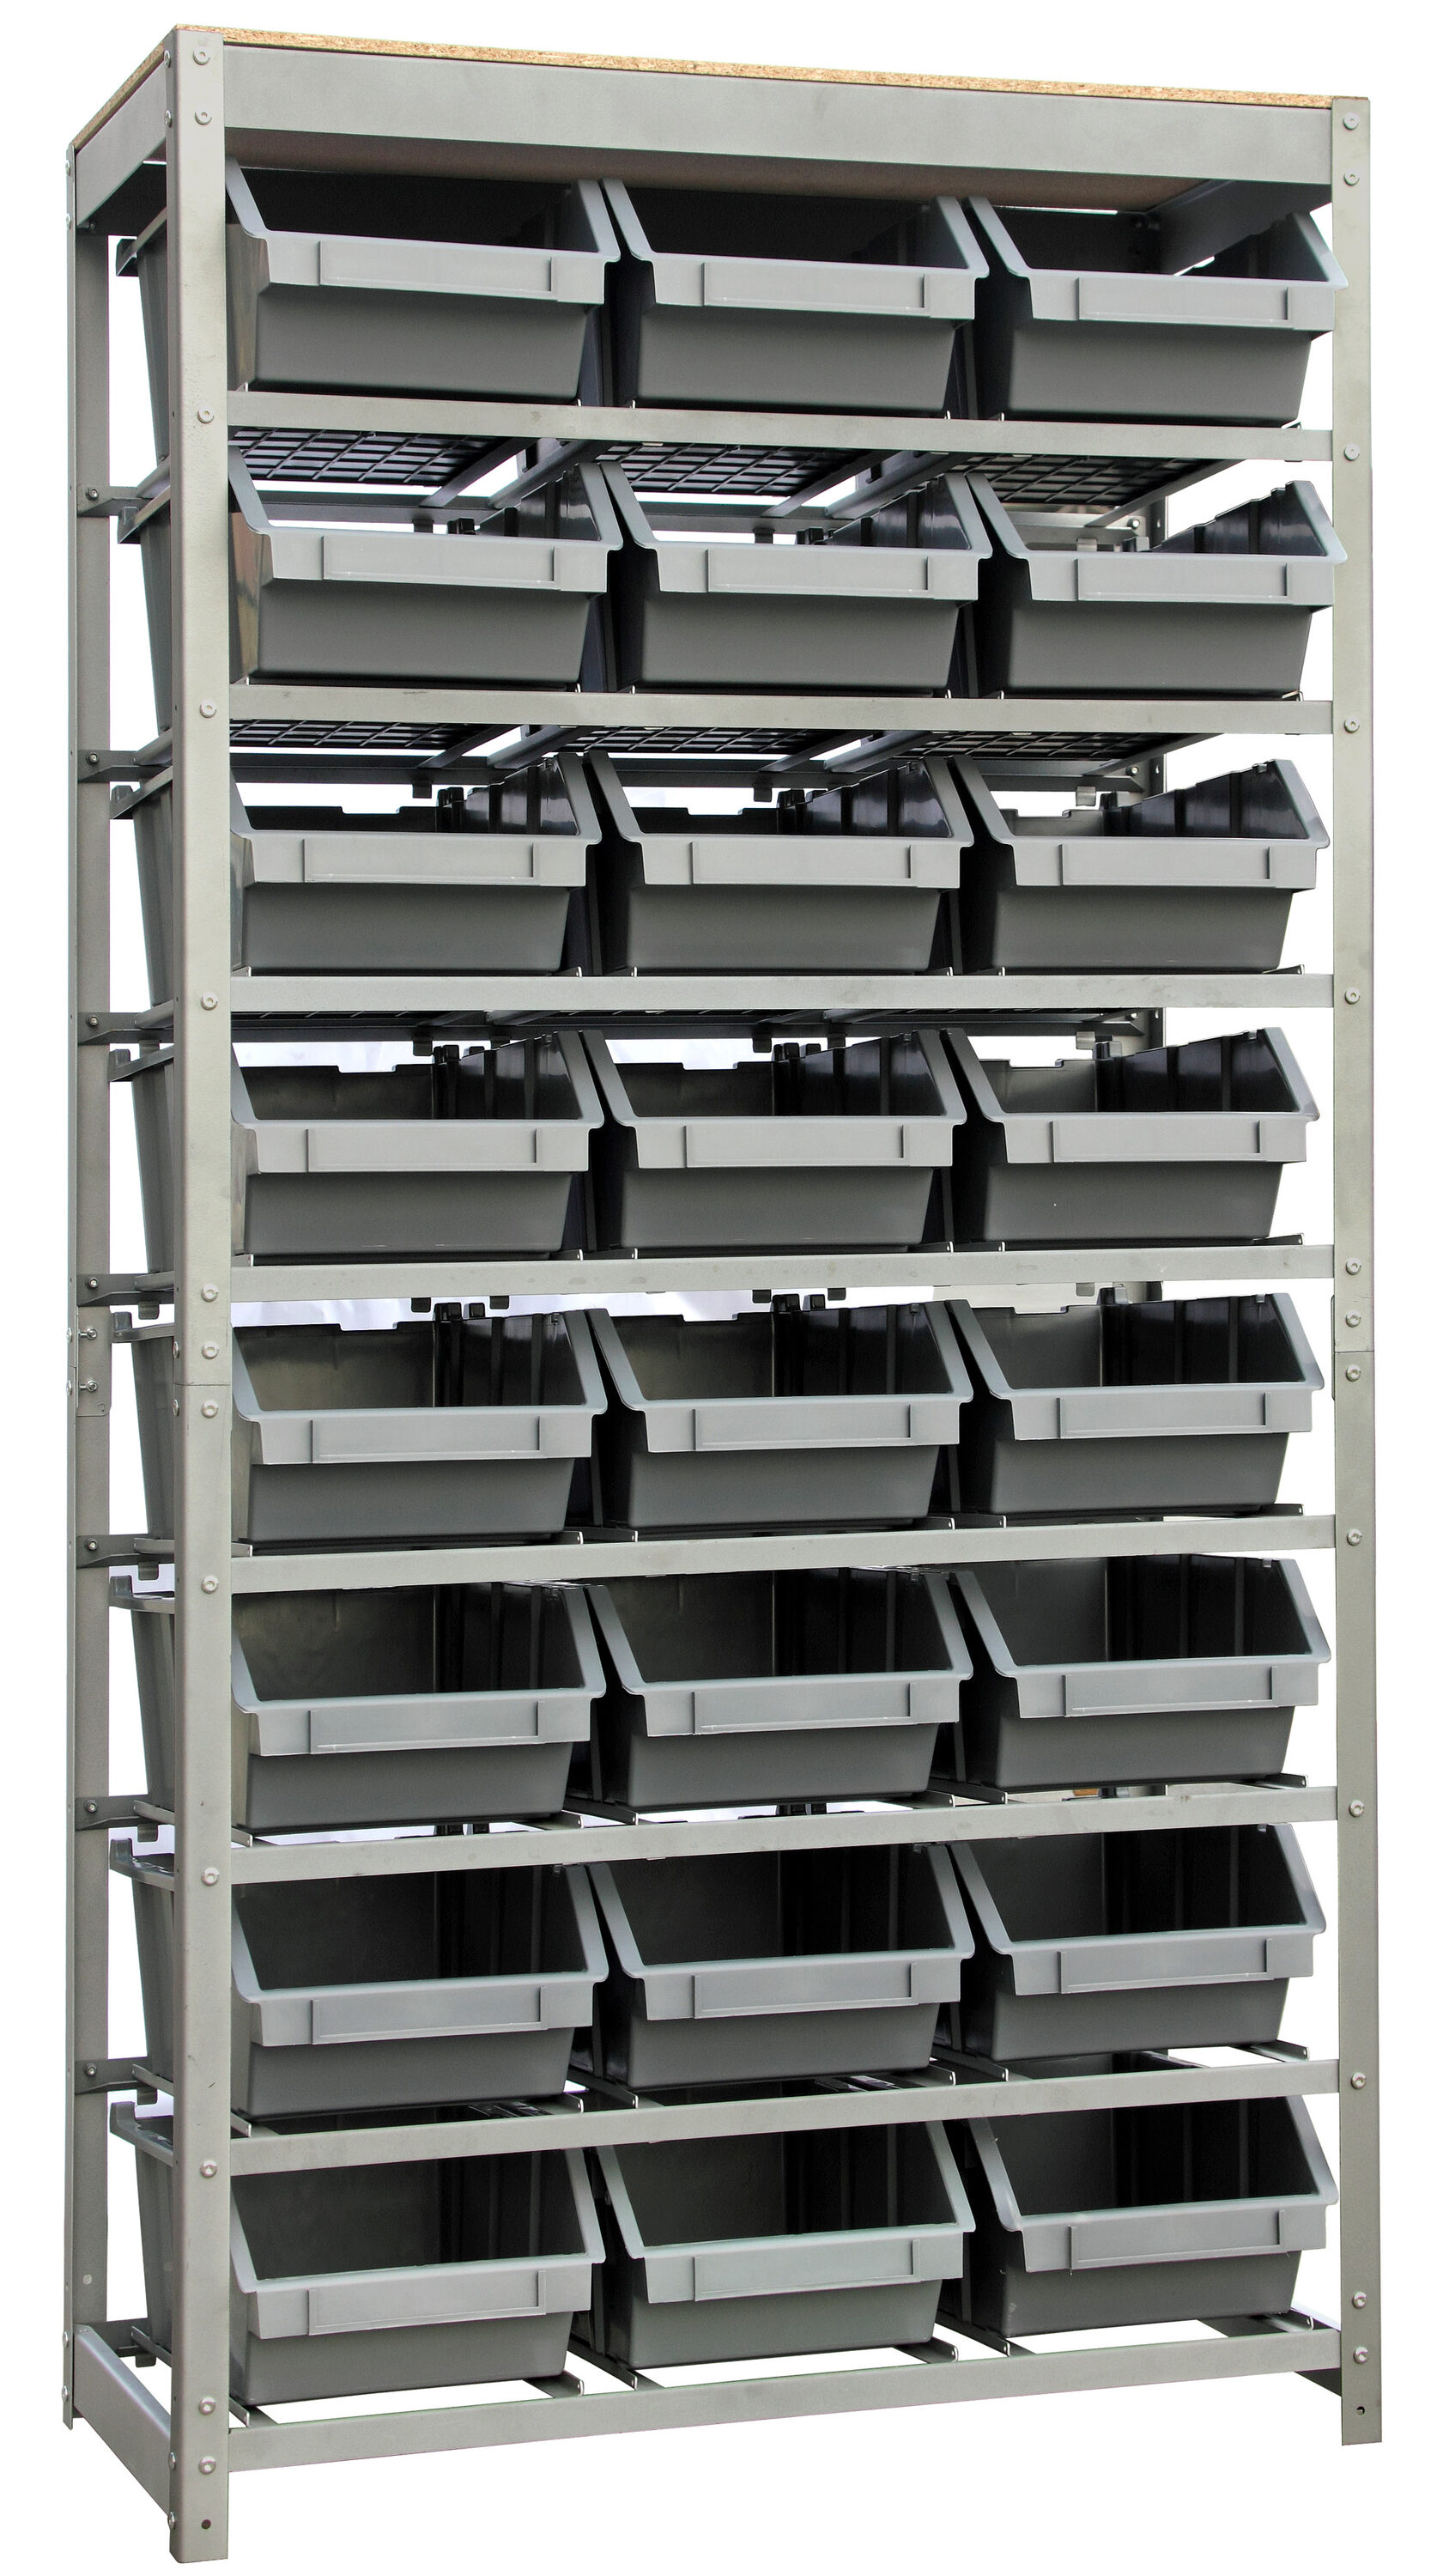 Bin Shelving Unit - 88 Corrugated Bins 12 Deep - Industrial Shelving,  Commercial Storage Shelves, Racks, Office Shelving